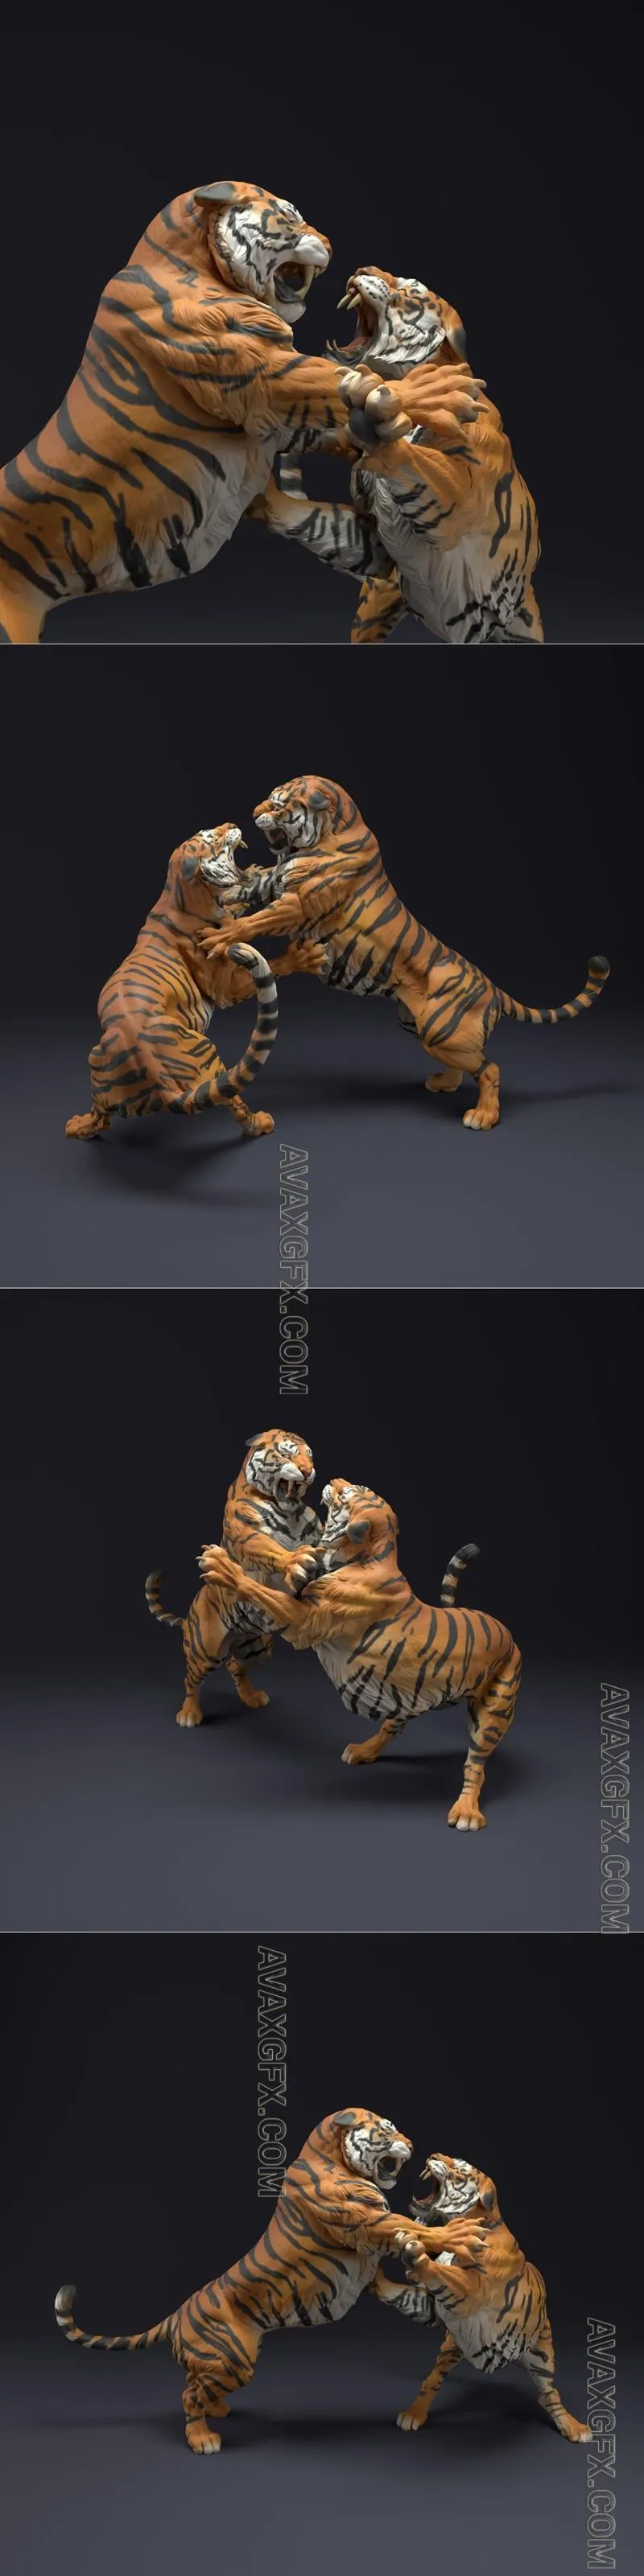 Bengal Tigers Fight - STL 3D Model